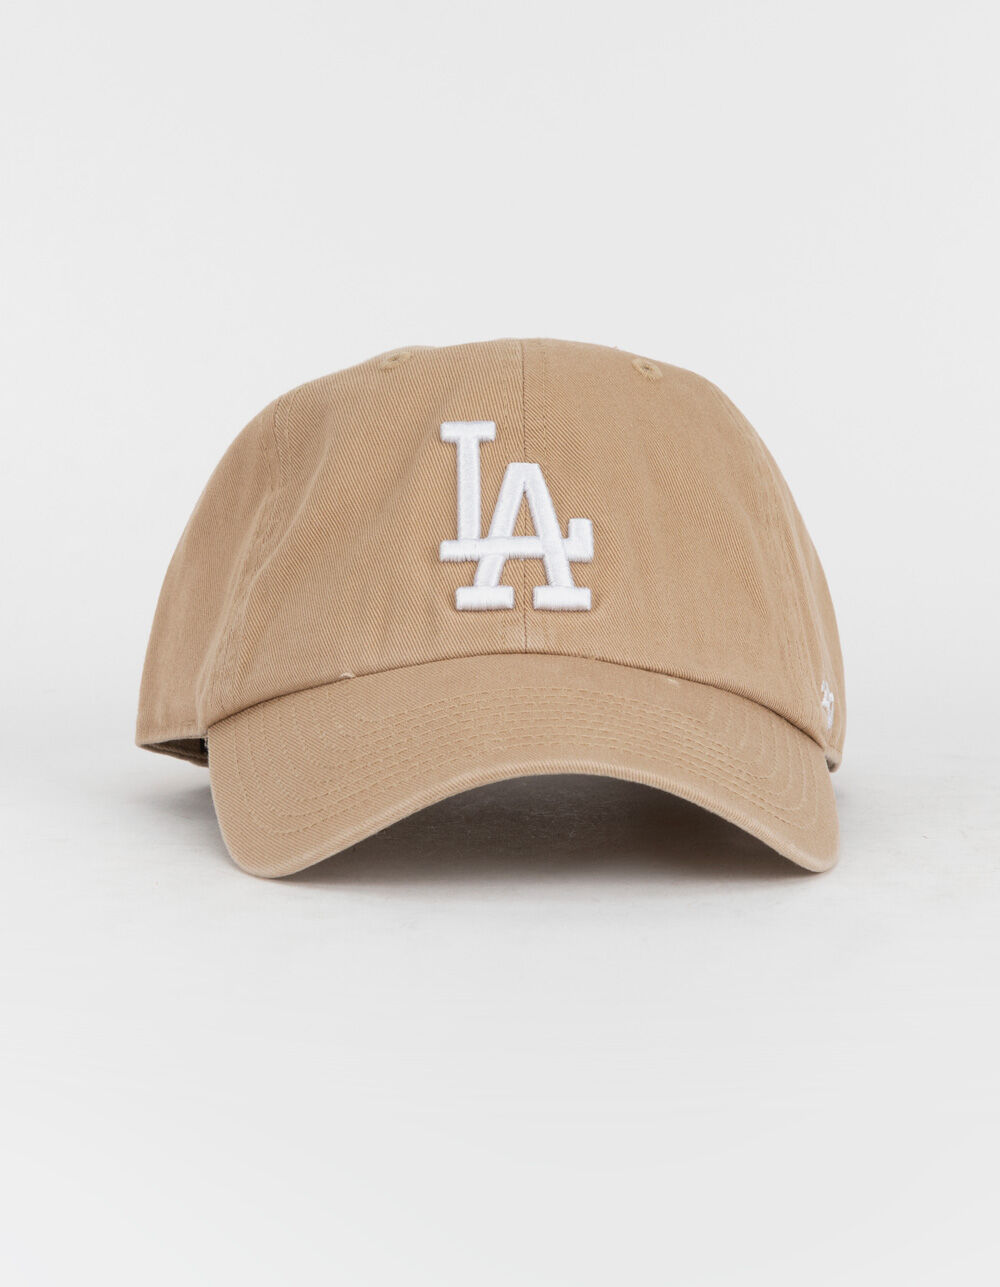 Fan Favorite Los Angeles Dodgers 47 Basic Adjustable Hat  Royal  OSFA   Walmartcom